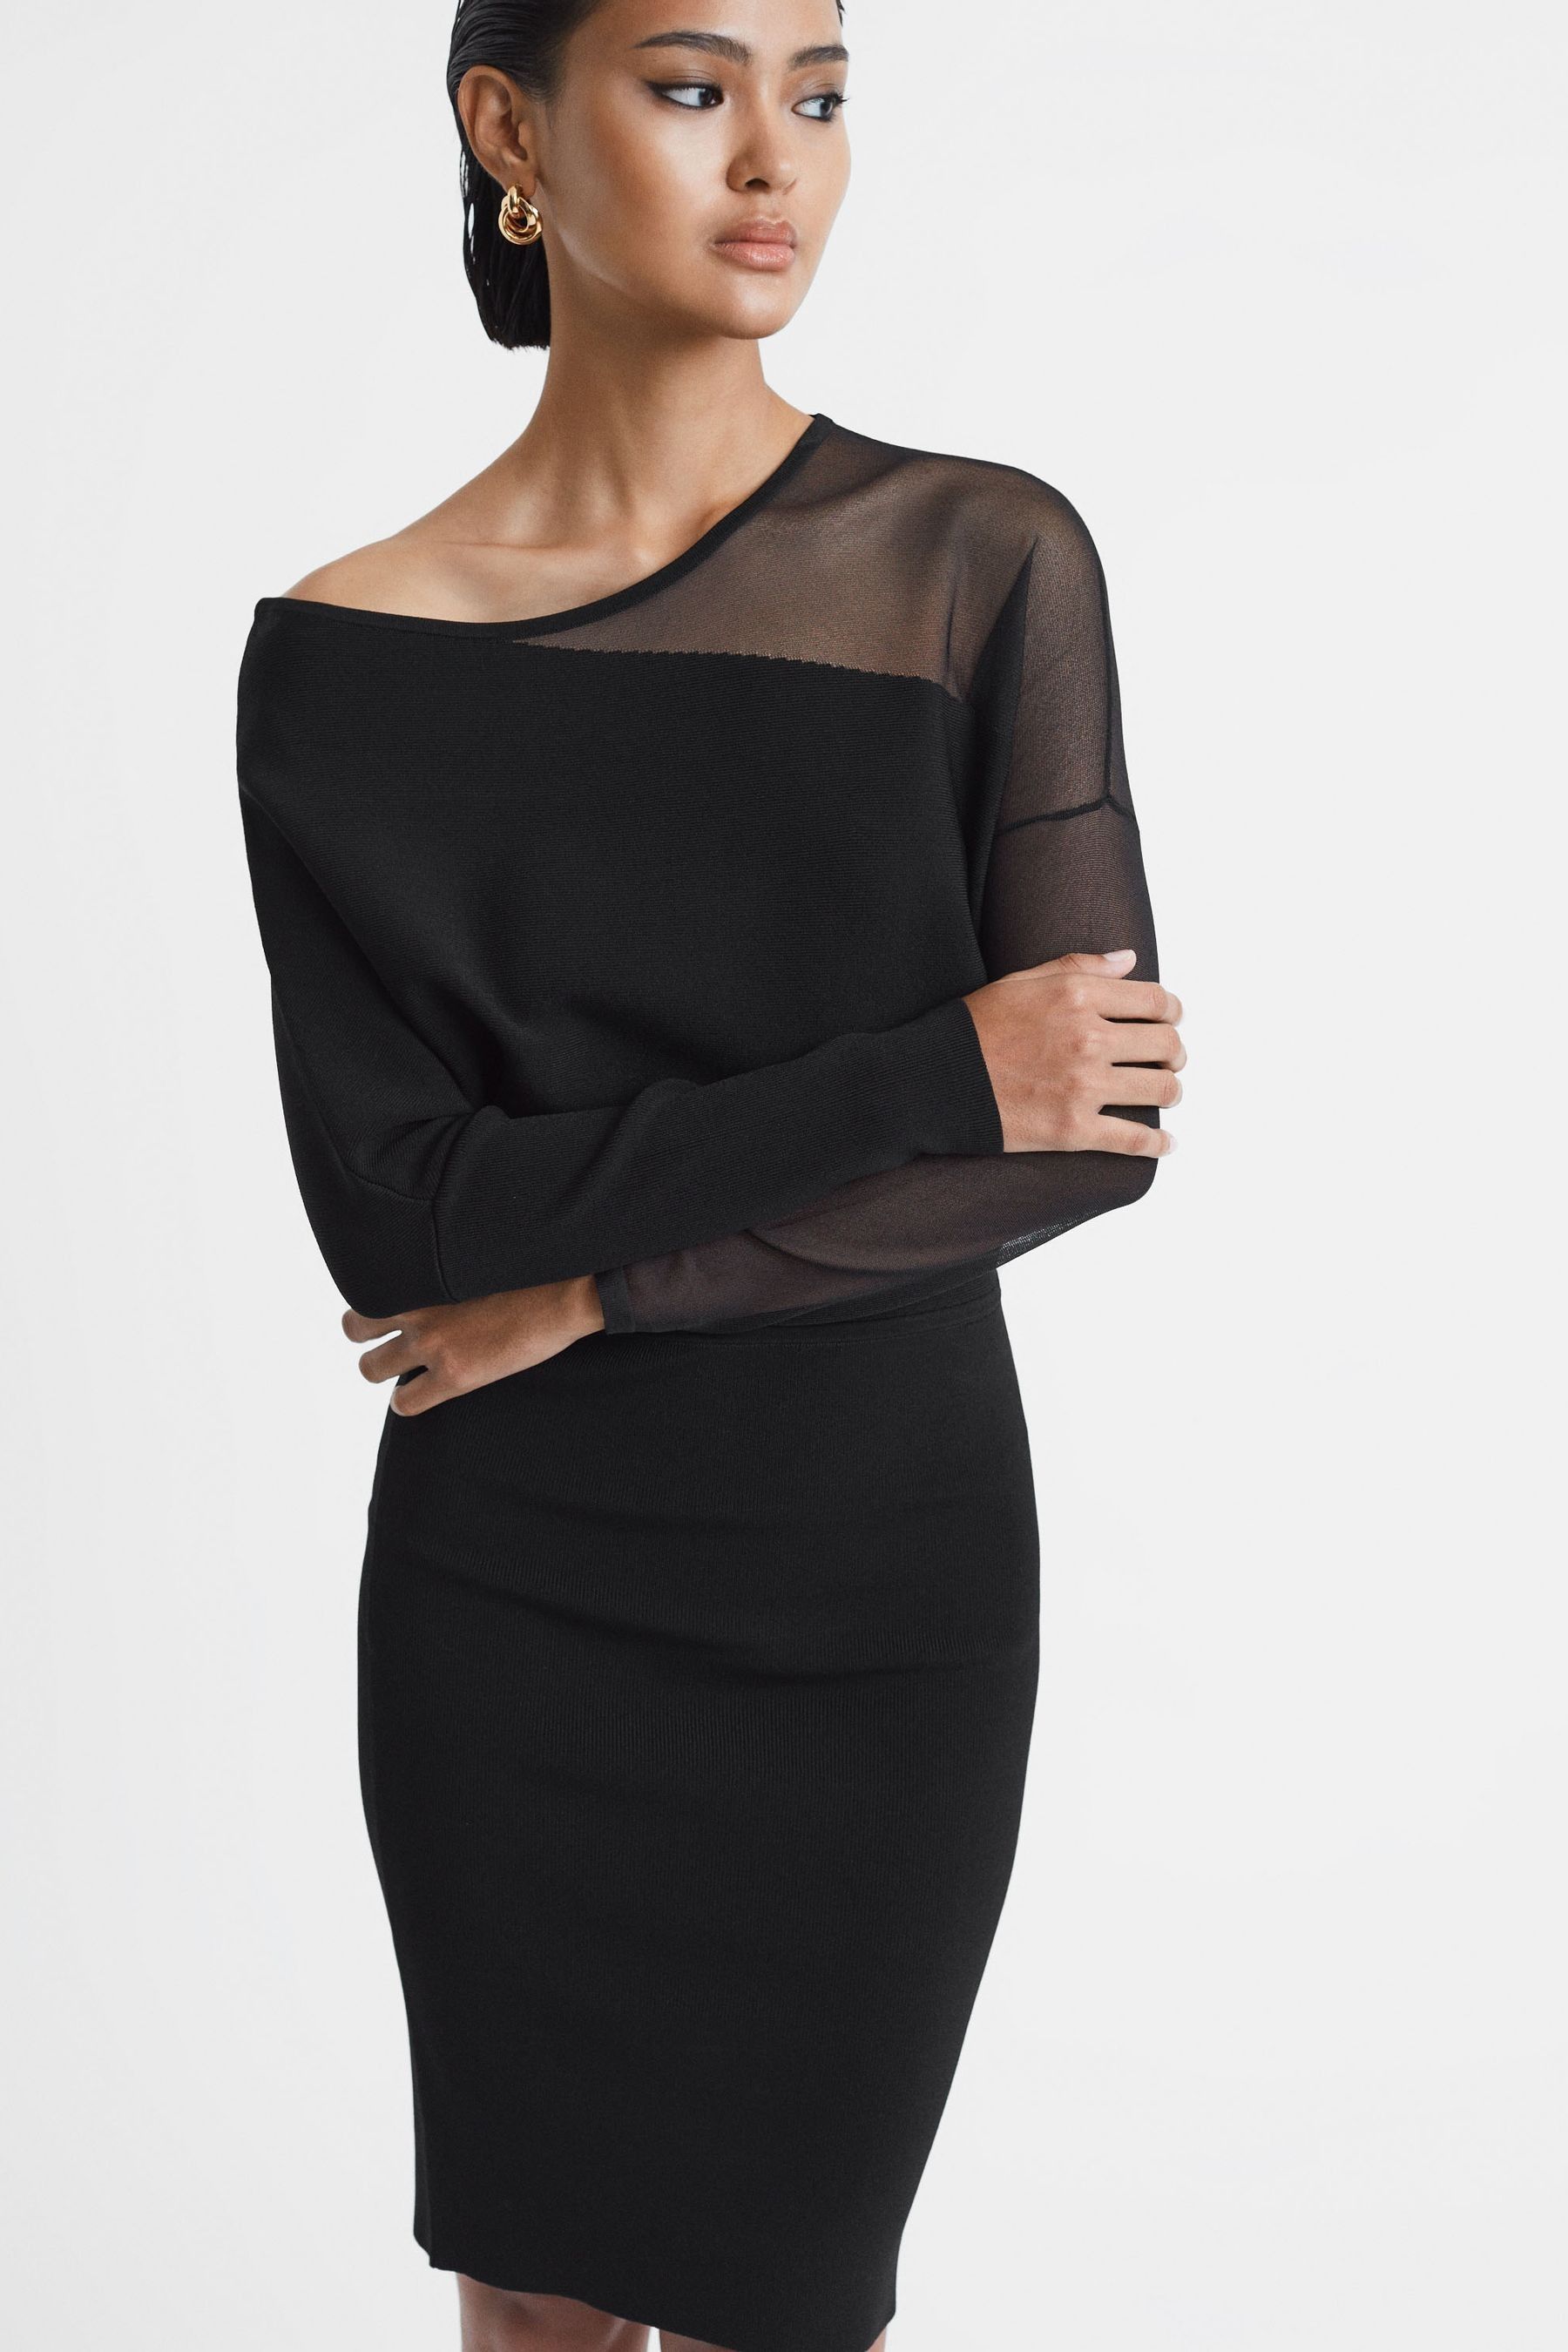 Deanna - Black Bodycon Knitted Sheer Midi Dress